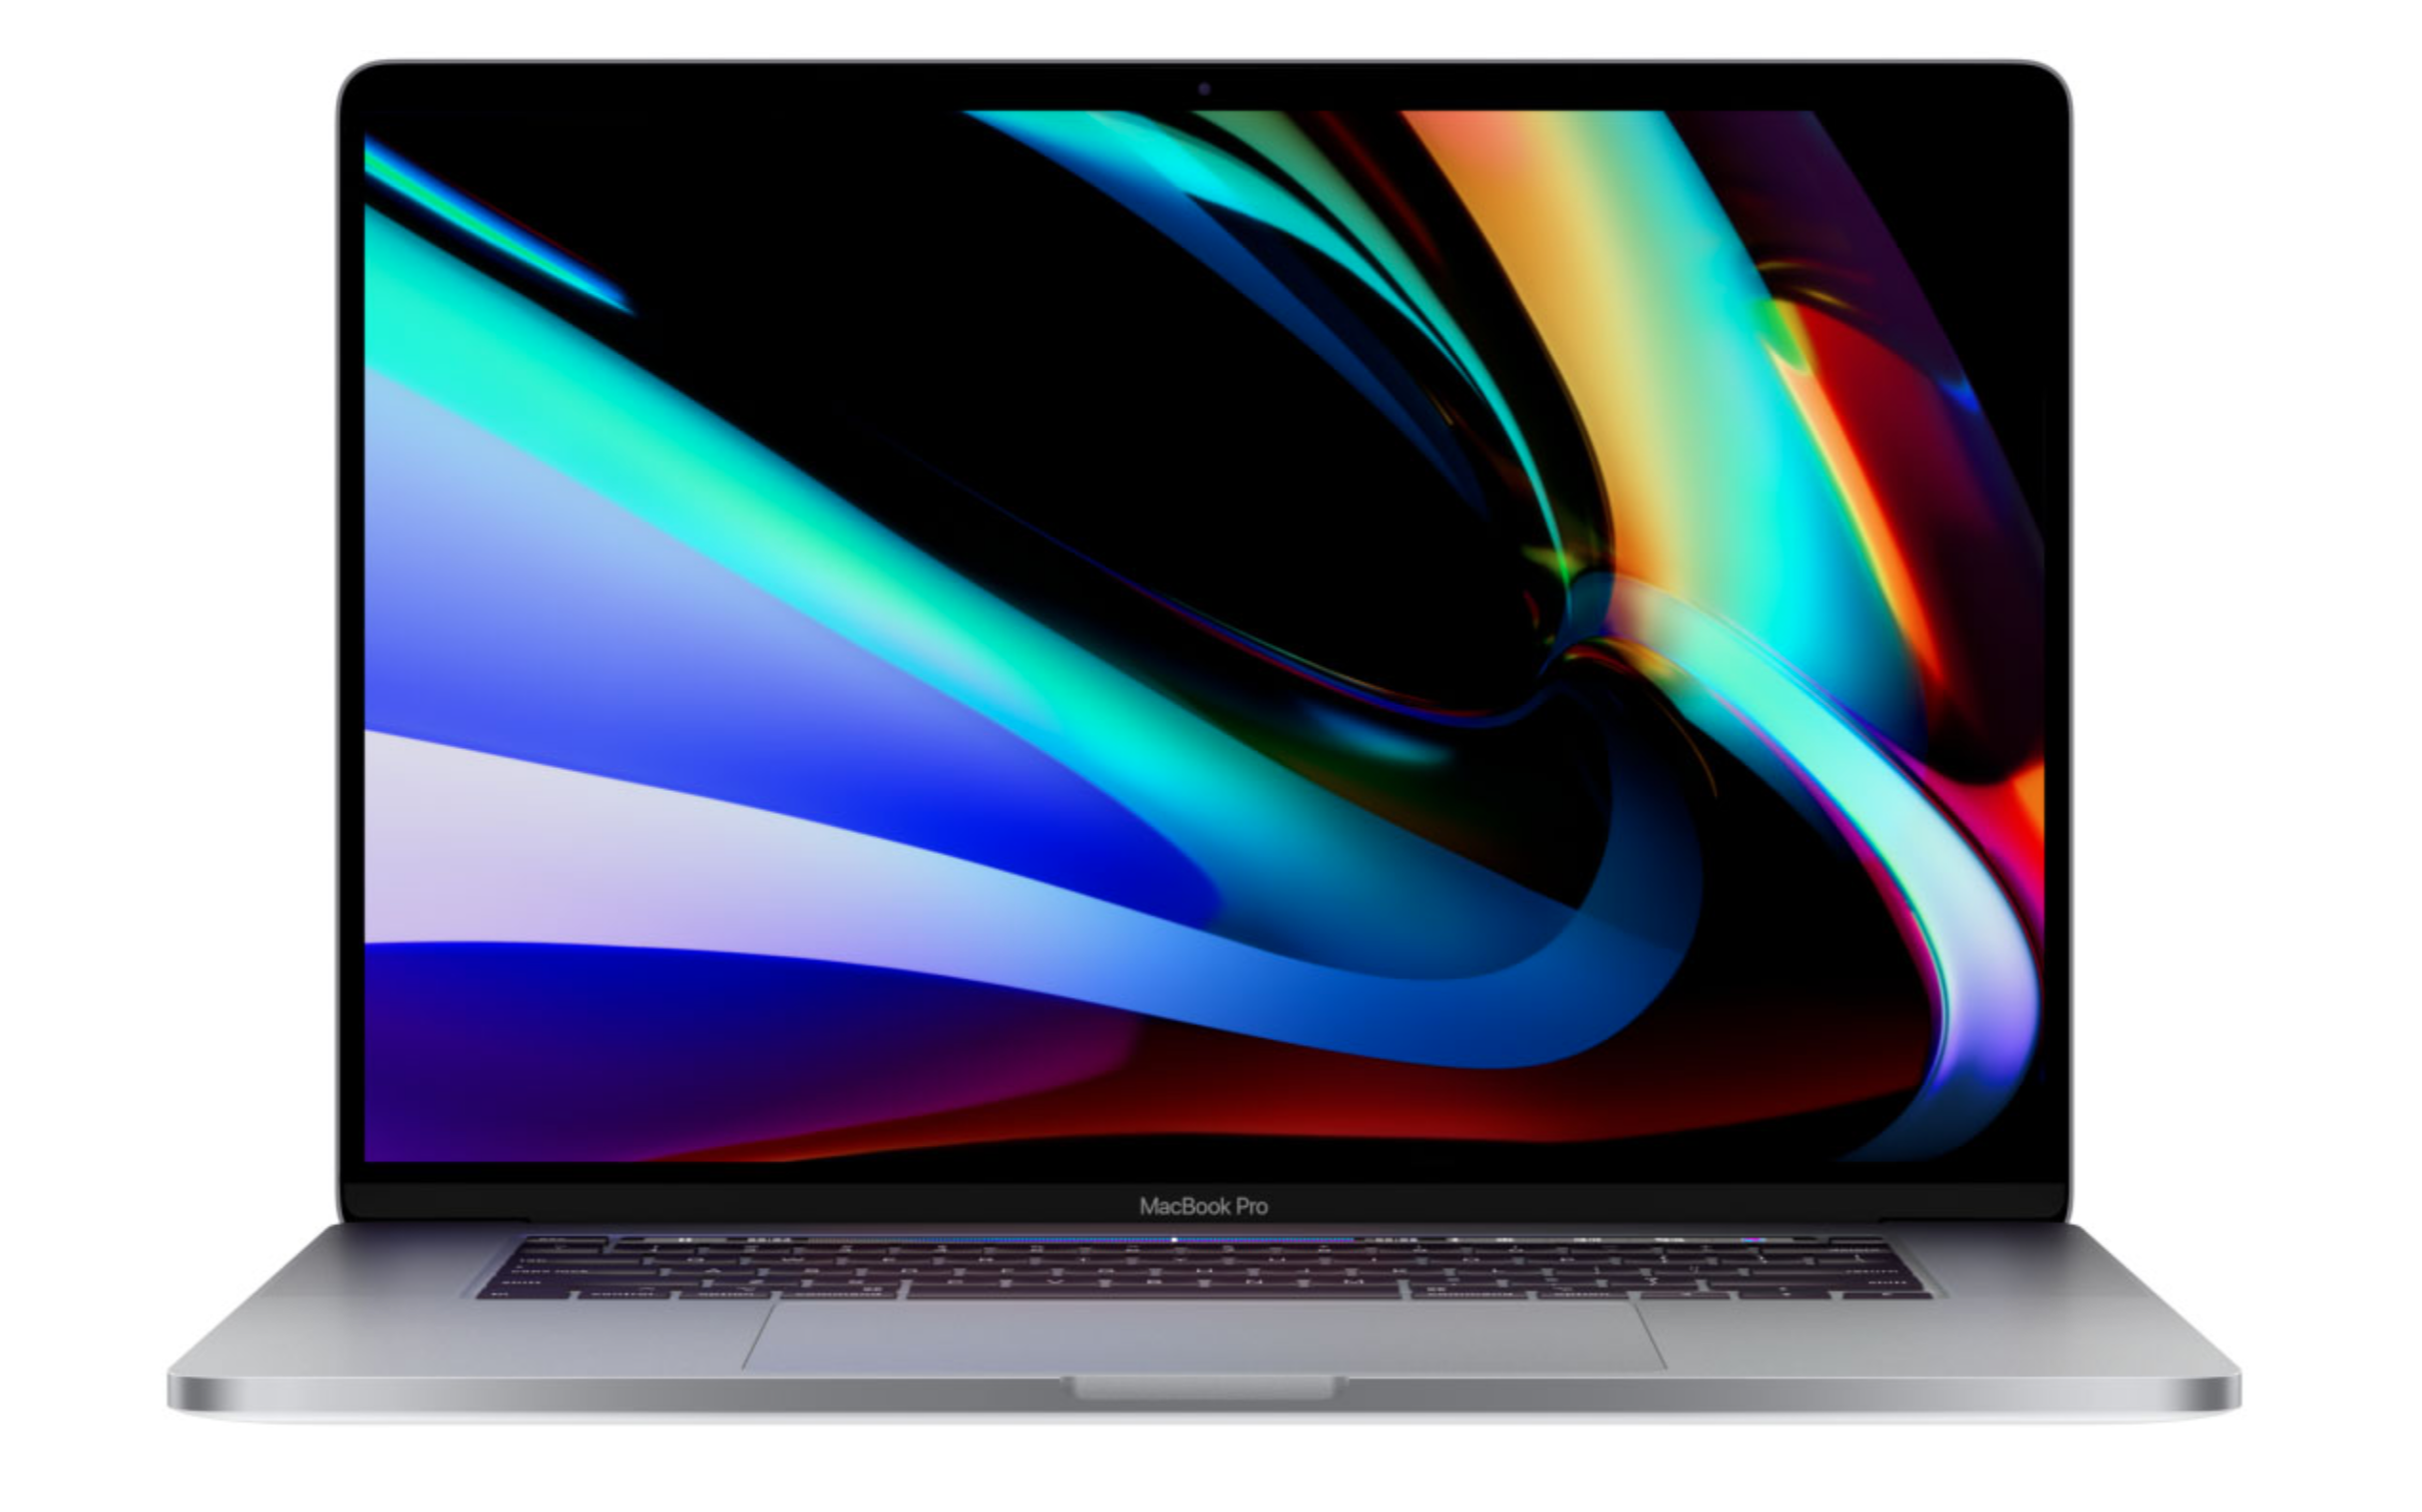 MacBook Pro 2019 15インチ　i7 16GB 512GB CTO